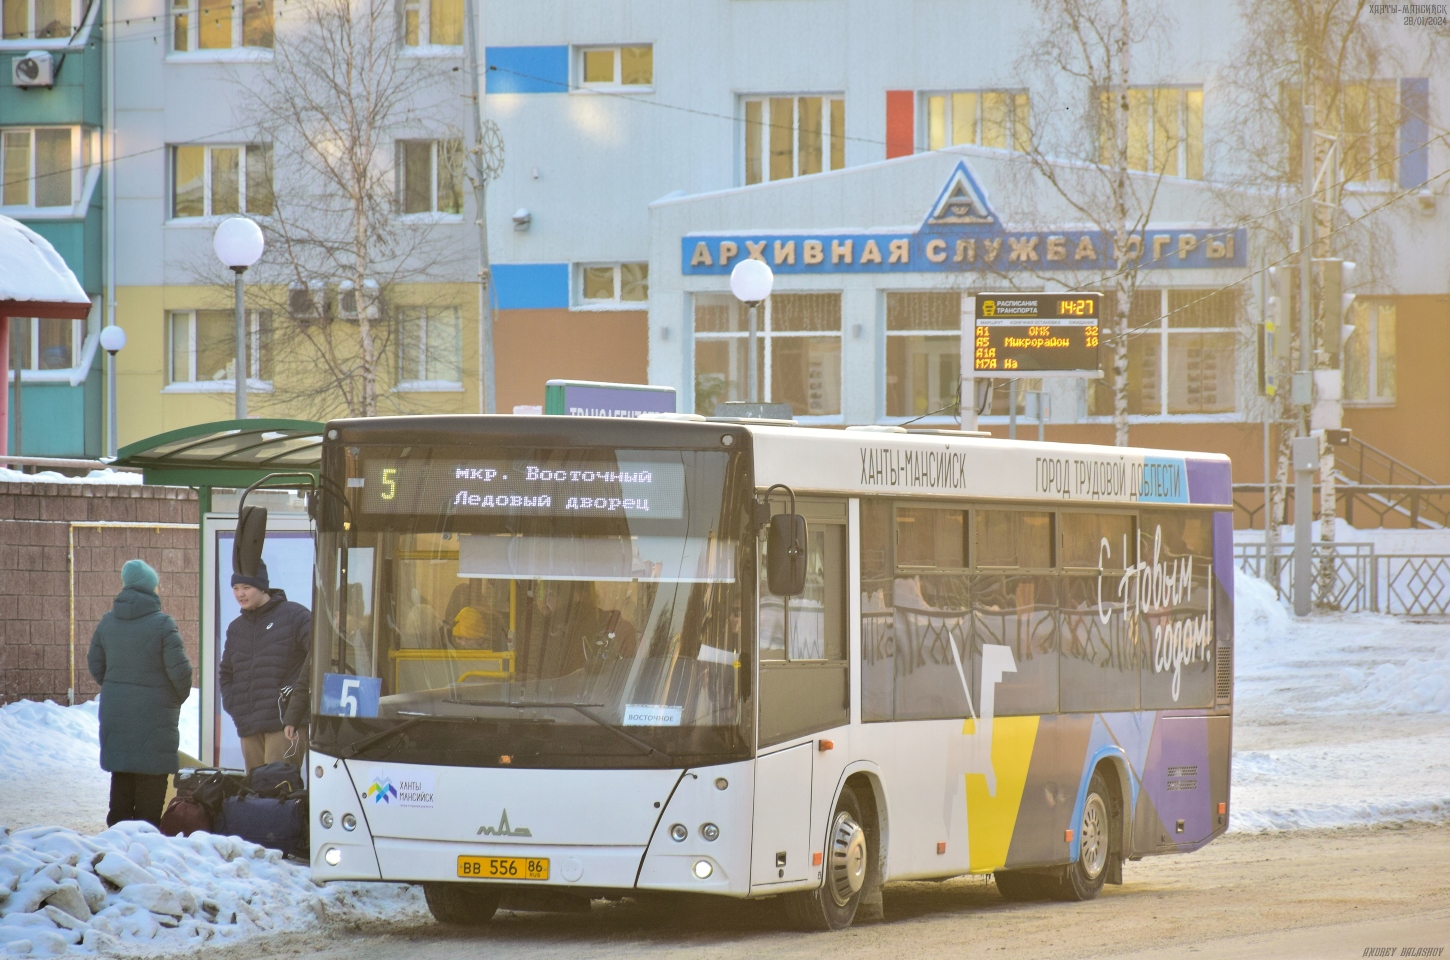 Khanty-Mansiysk, MAZ-206.086 # ВВ 556 86